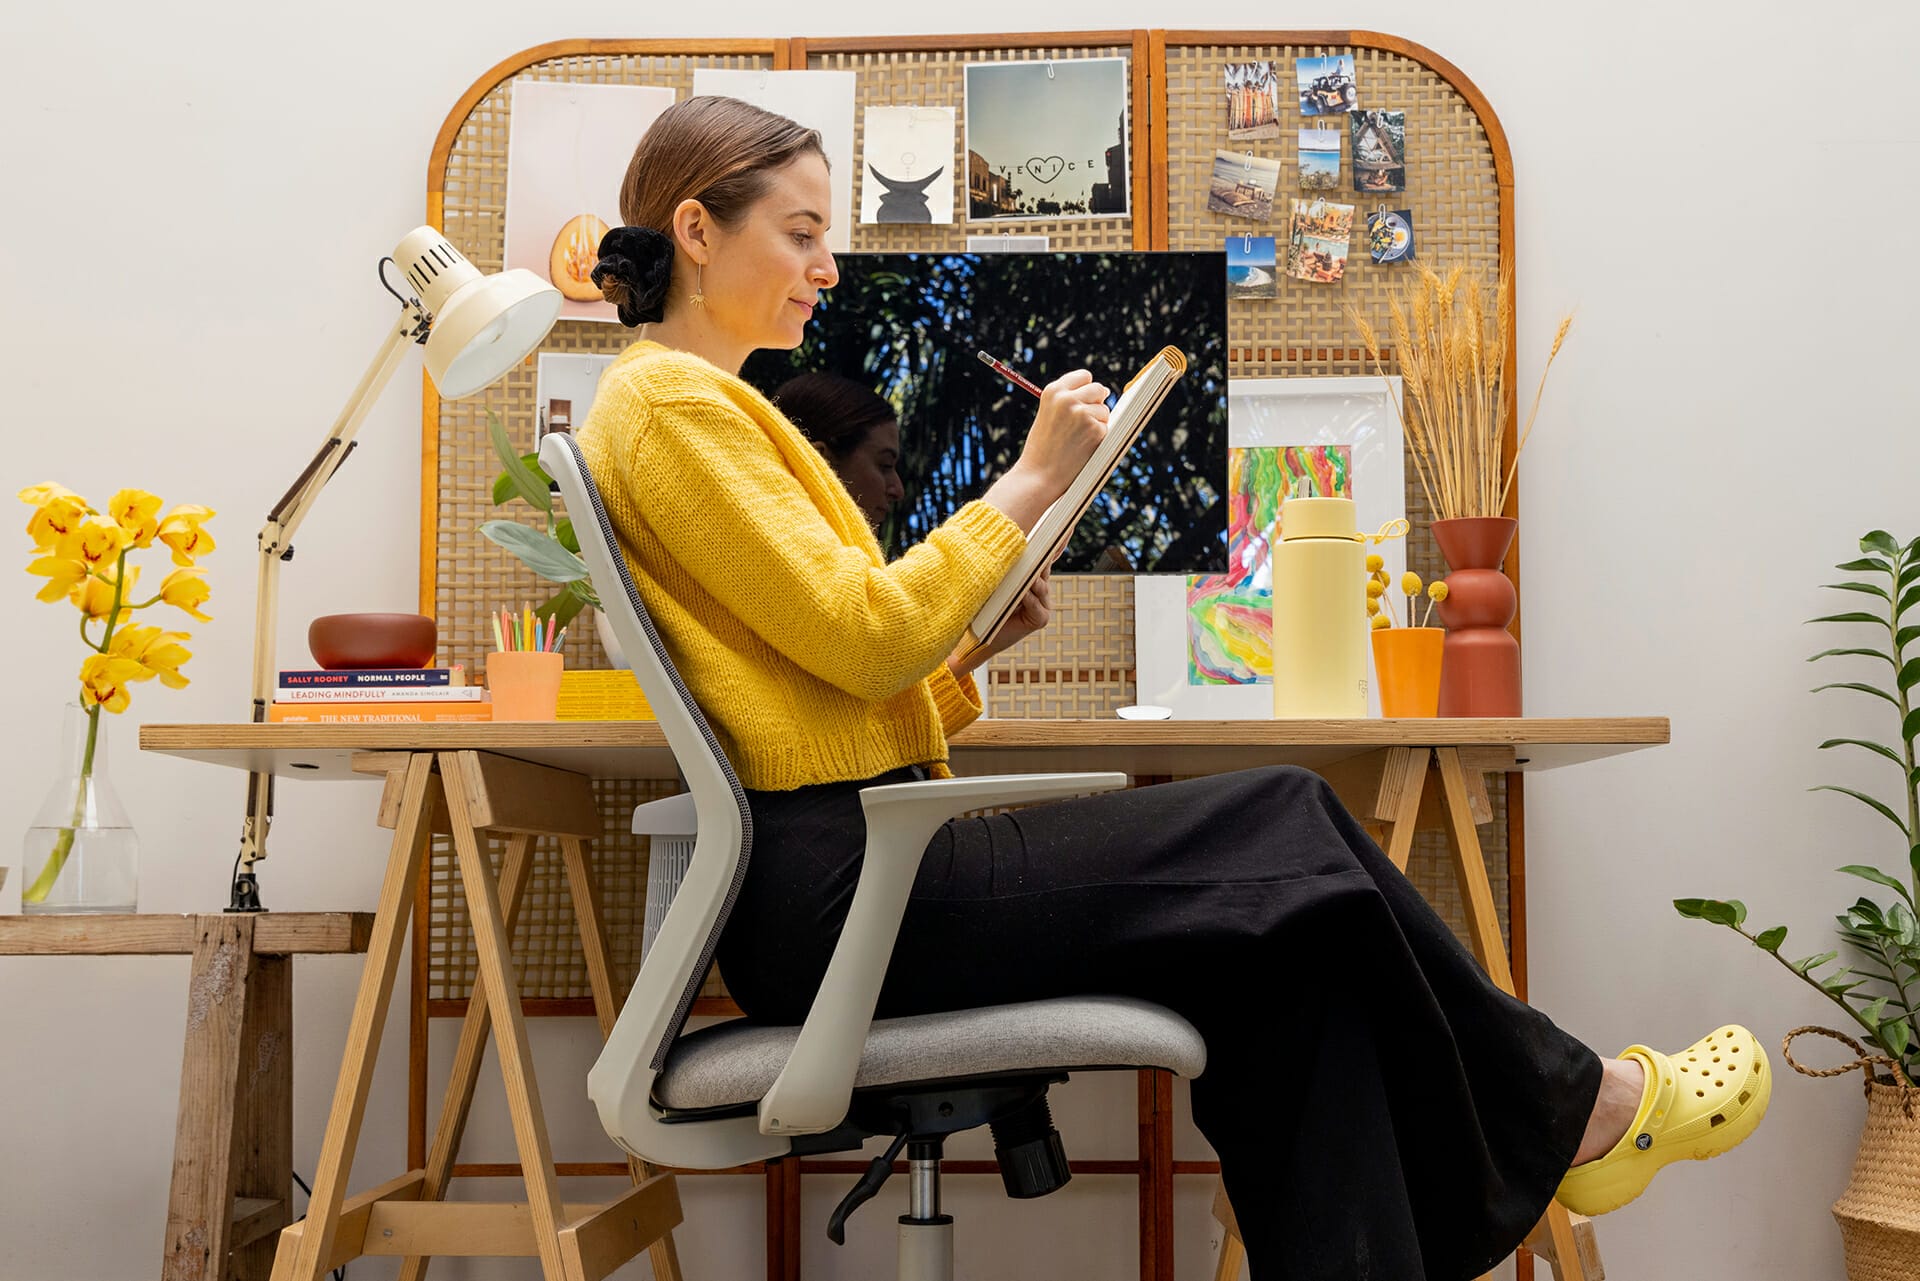 mondo soho chair in home office girl writing